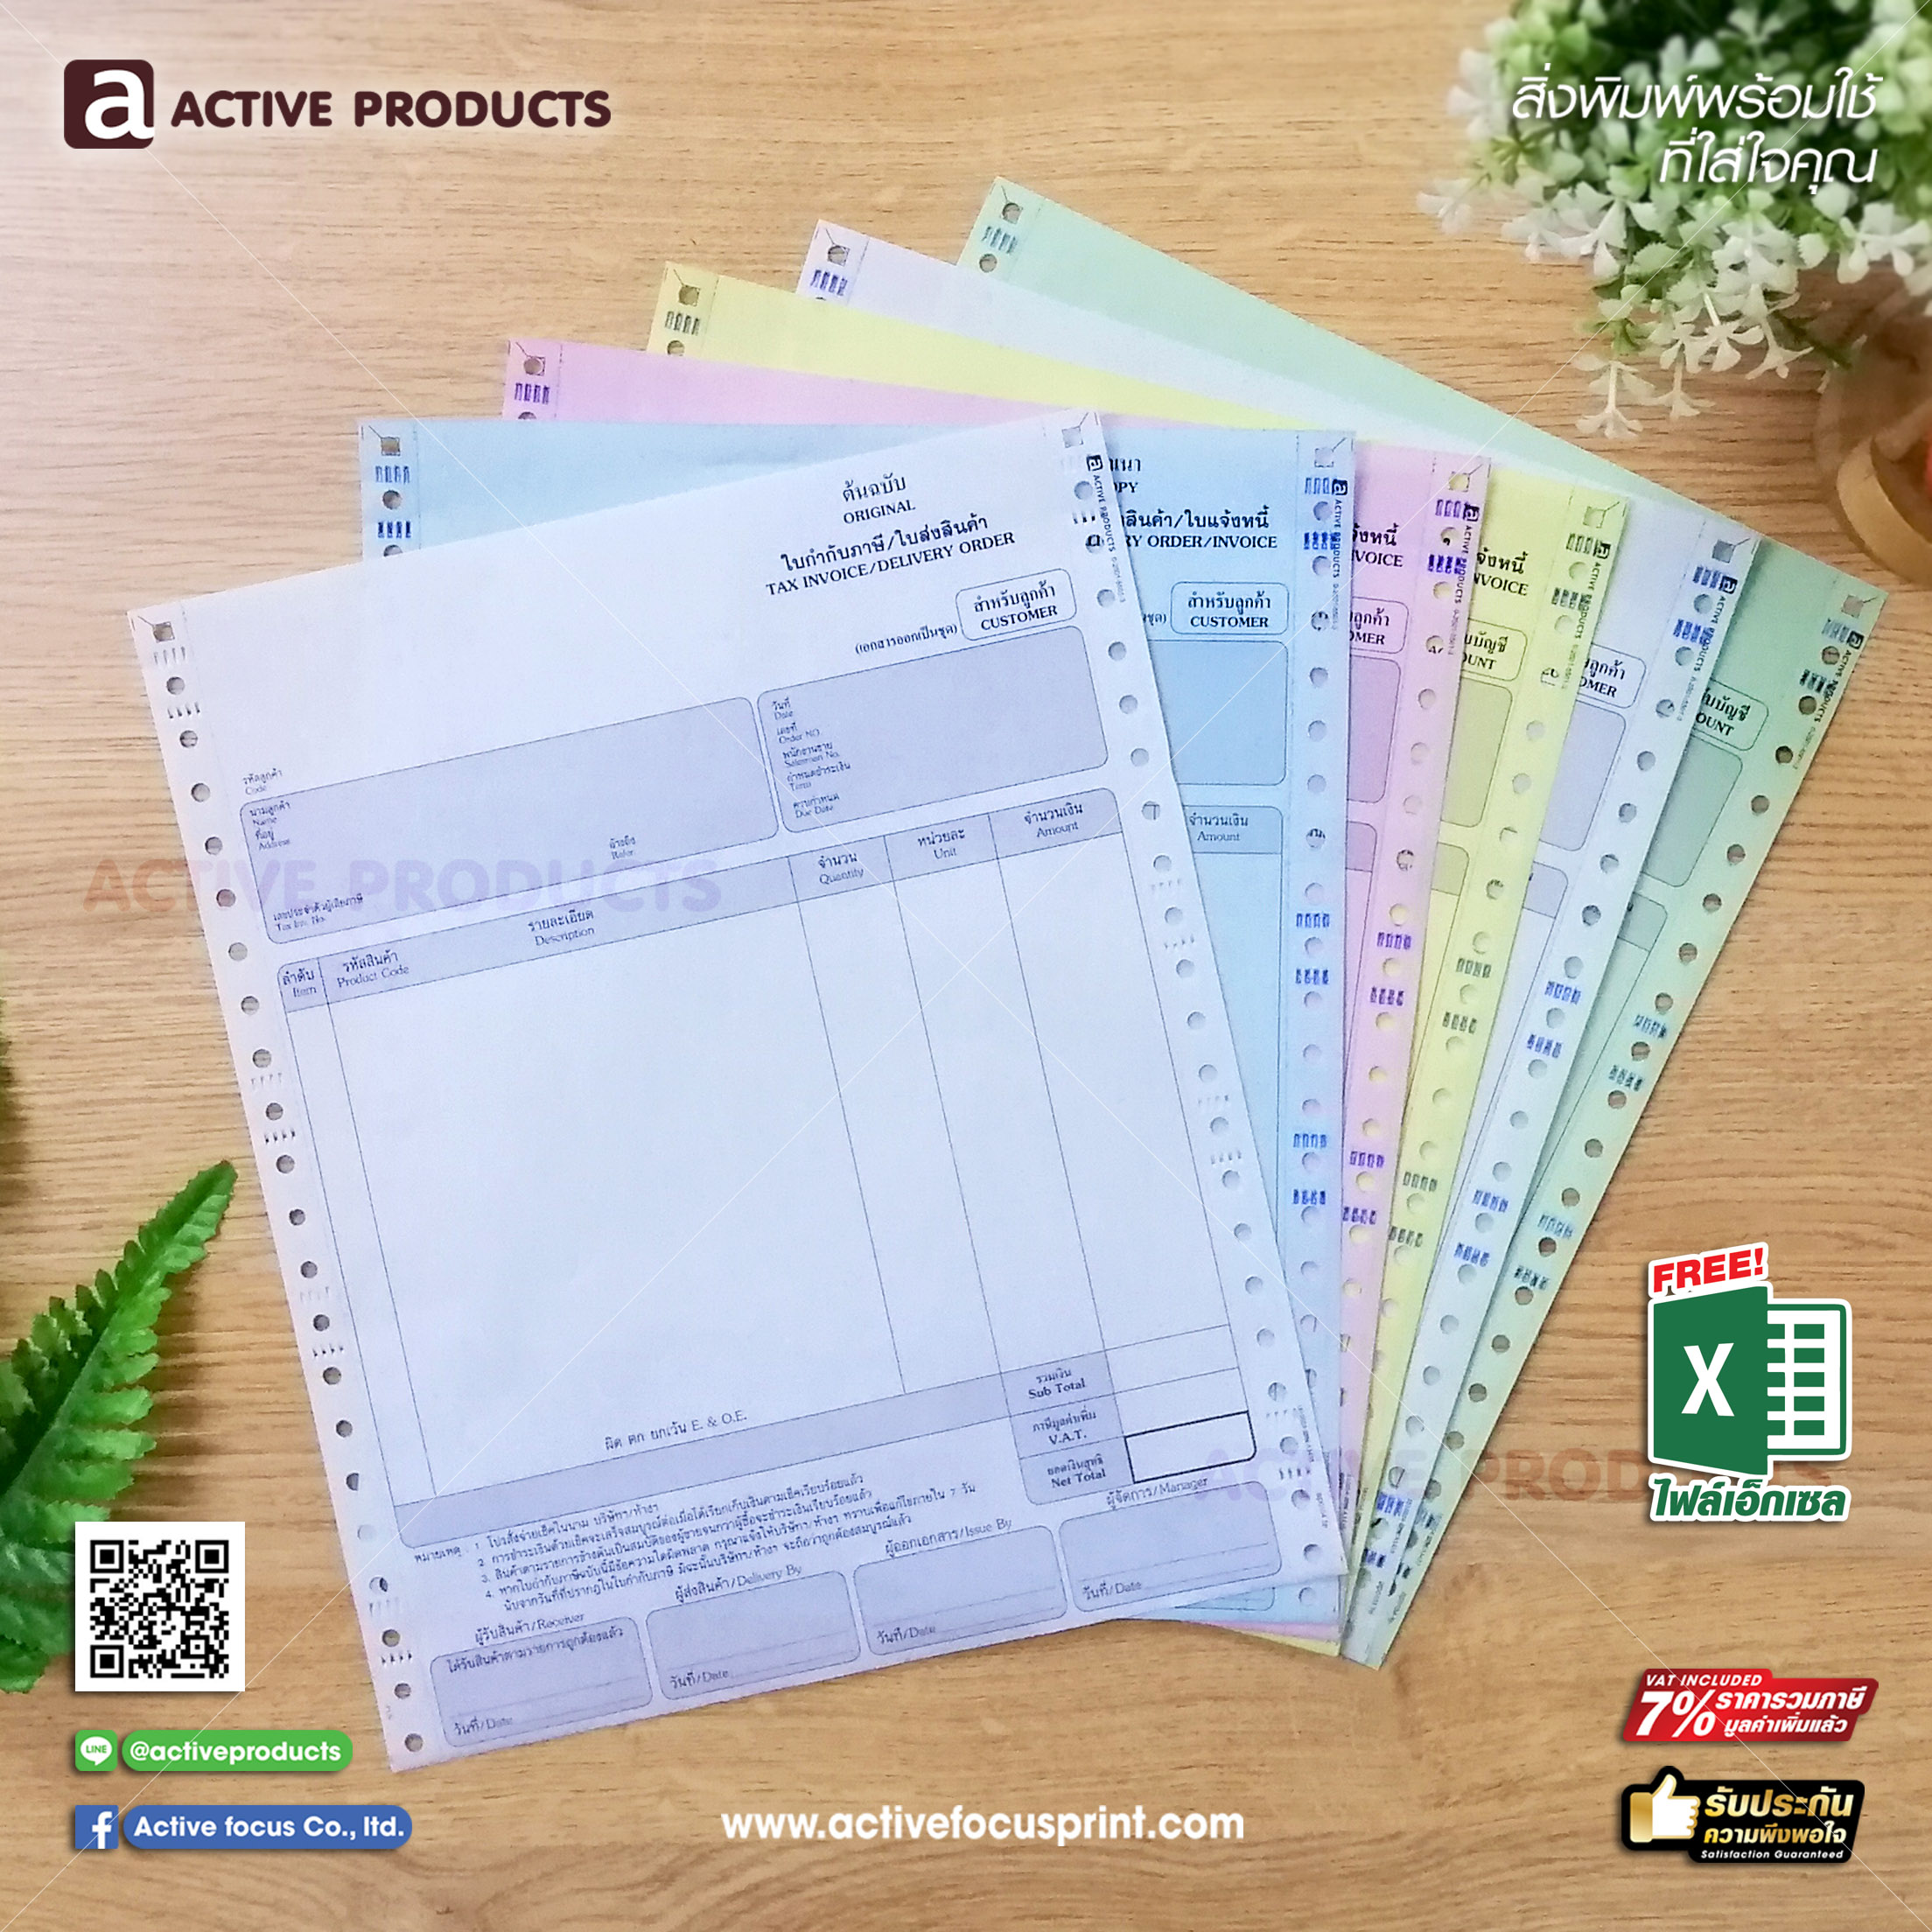 Activeproducts กระดาษต่อเนื่อง 6 ชั้น - ใบกำกับภาษี/ใบส่งสินค้า Tax Invoice/Delivery Order (AP0104-6P) เคมีในตัว จำนวน 6 ชั้น 1 กล่องบรรจุ 250 ชุด *ฟรีไฟล์ Excel